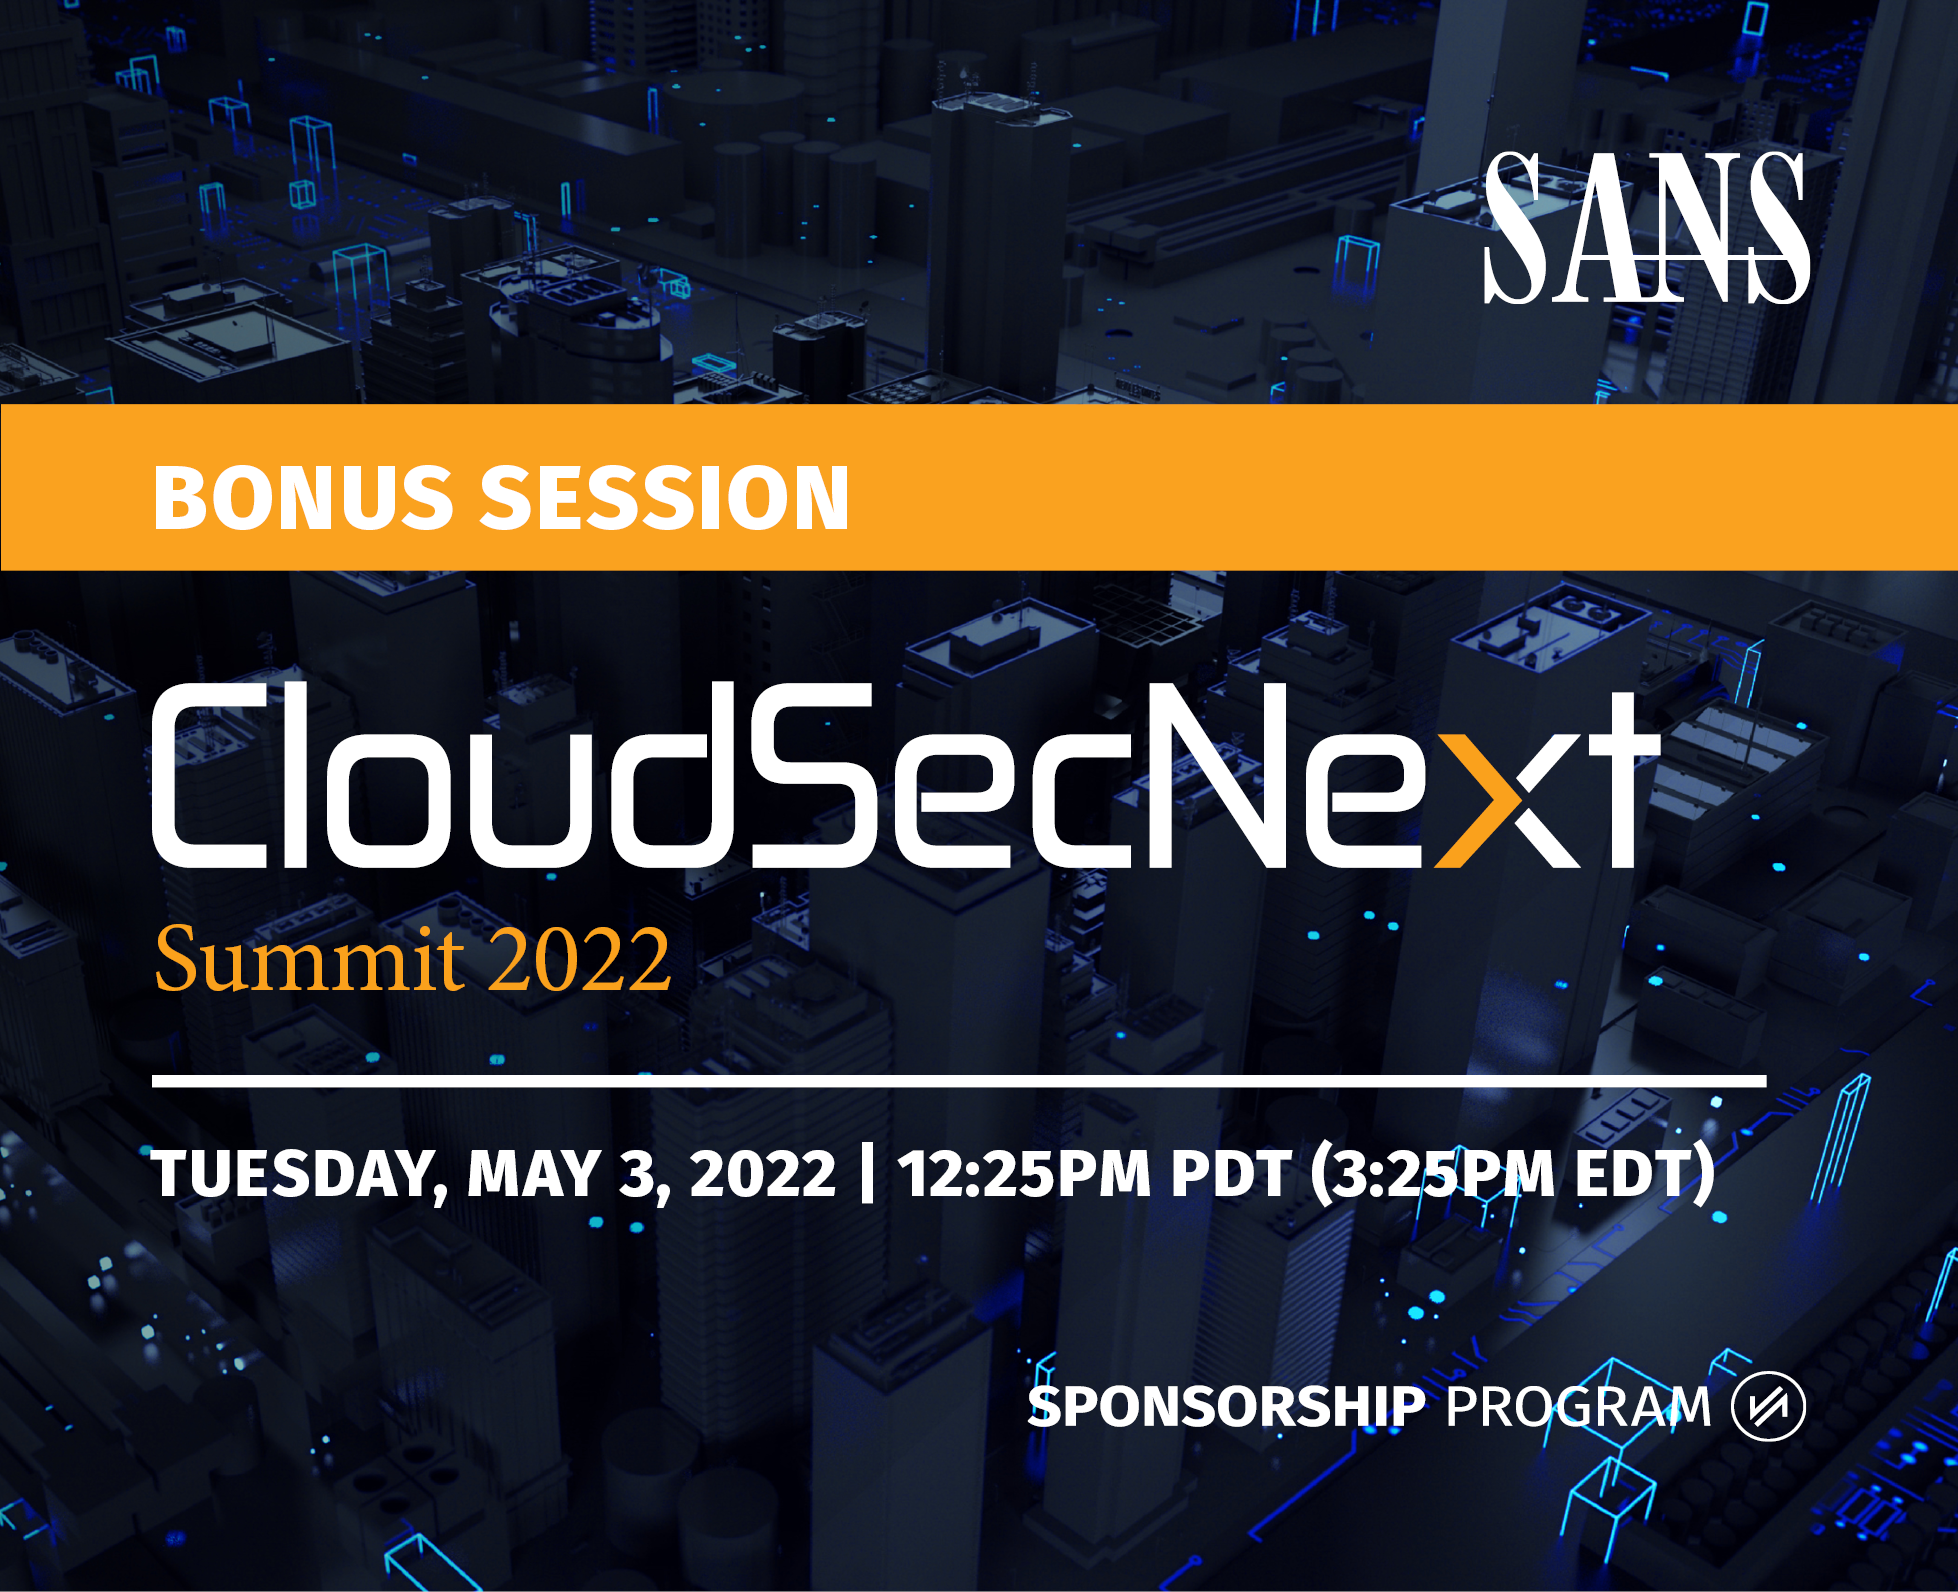 CloudSecNext Summit Bonus Session